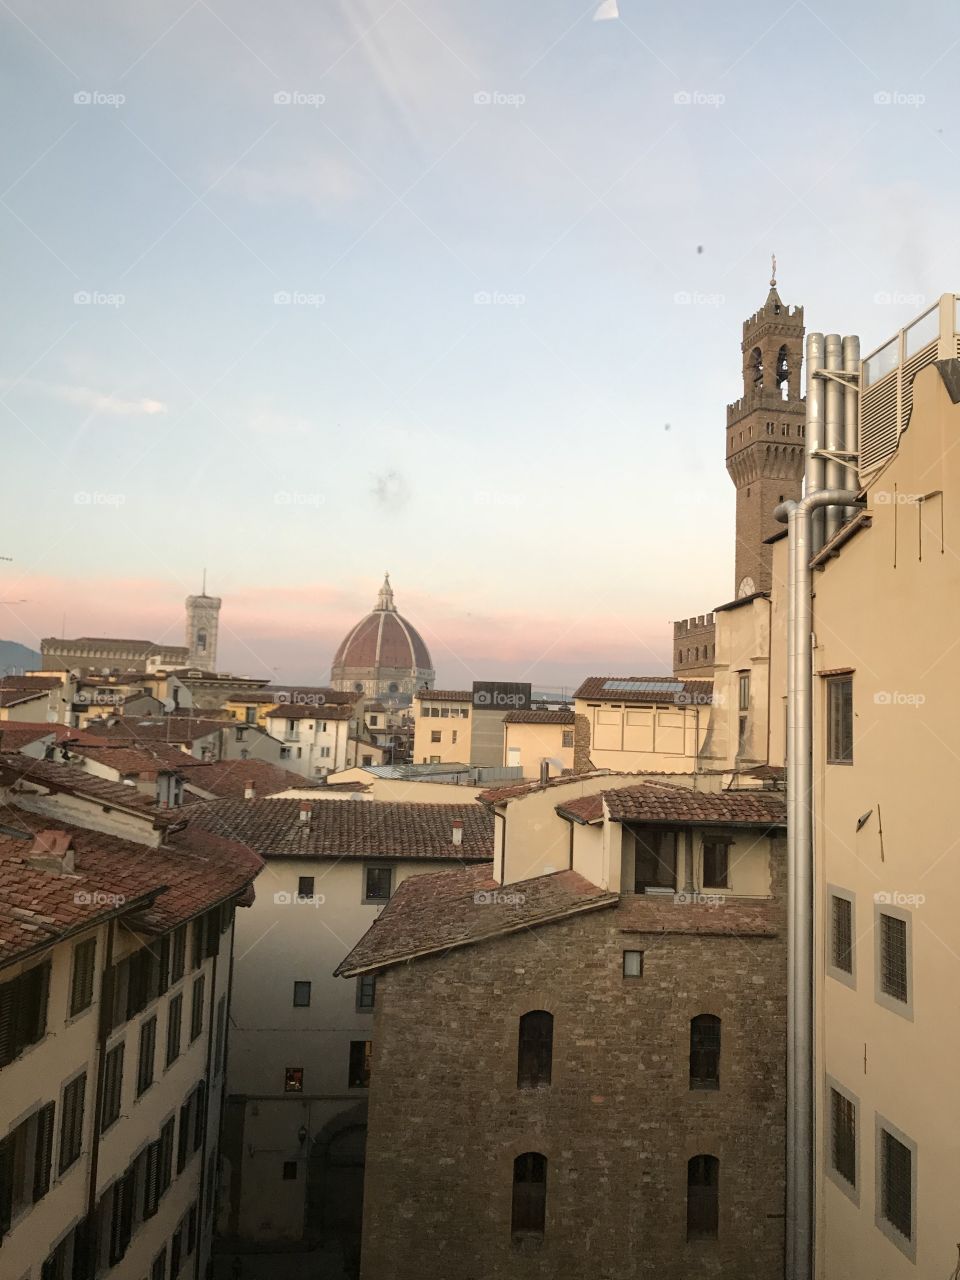 Duomo #1

Florence, Italy